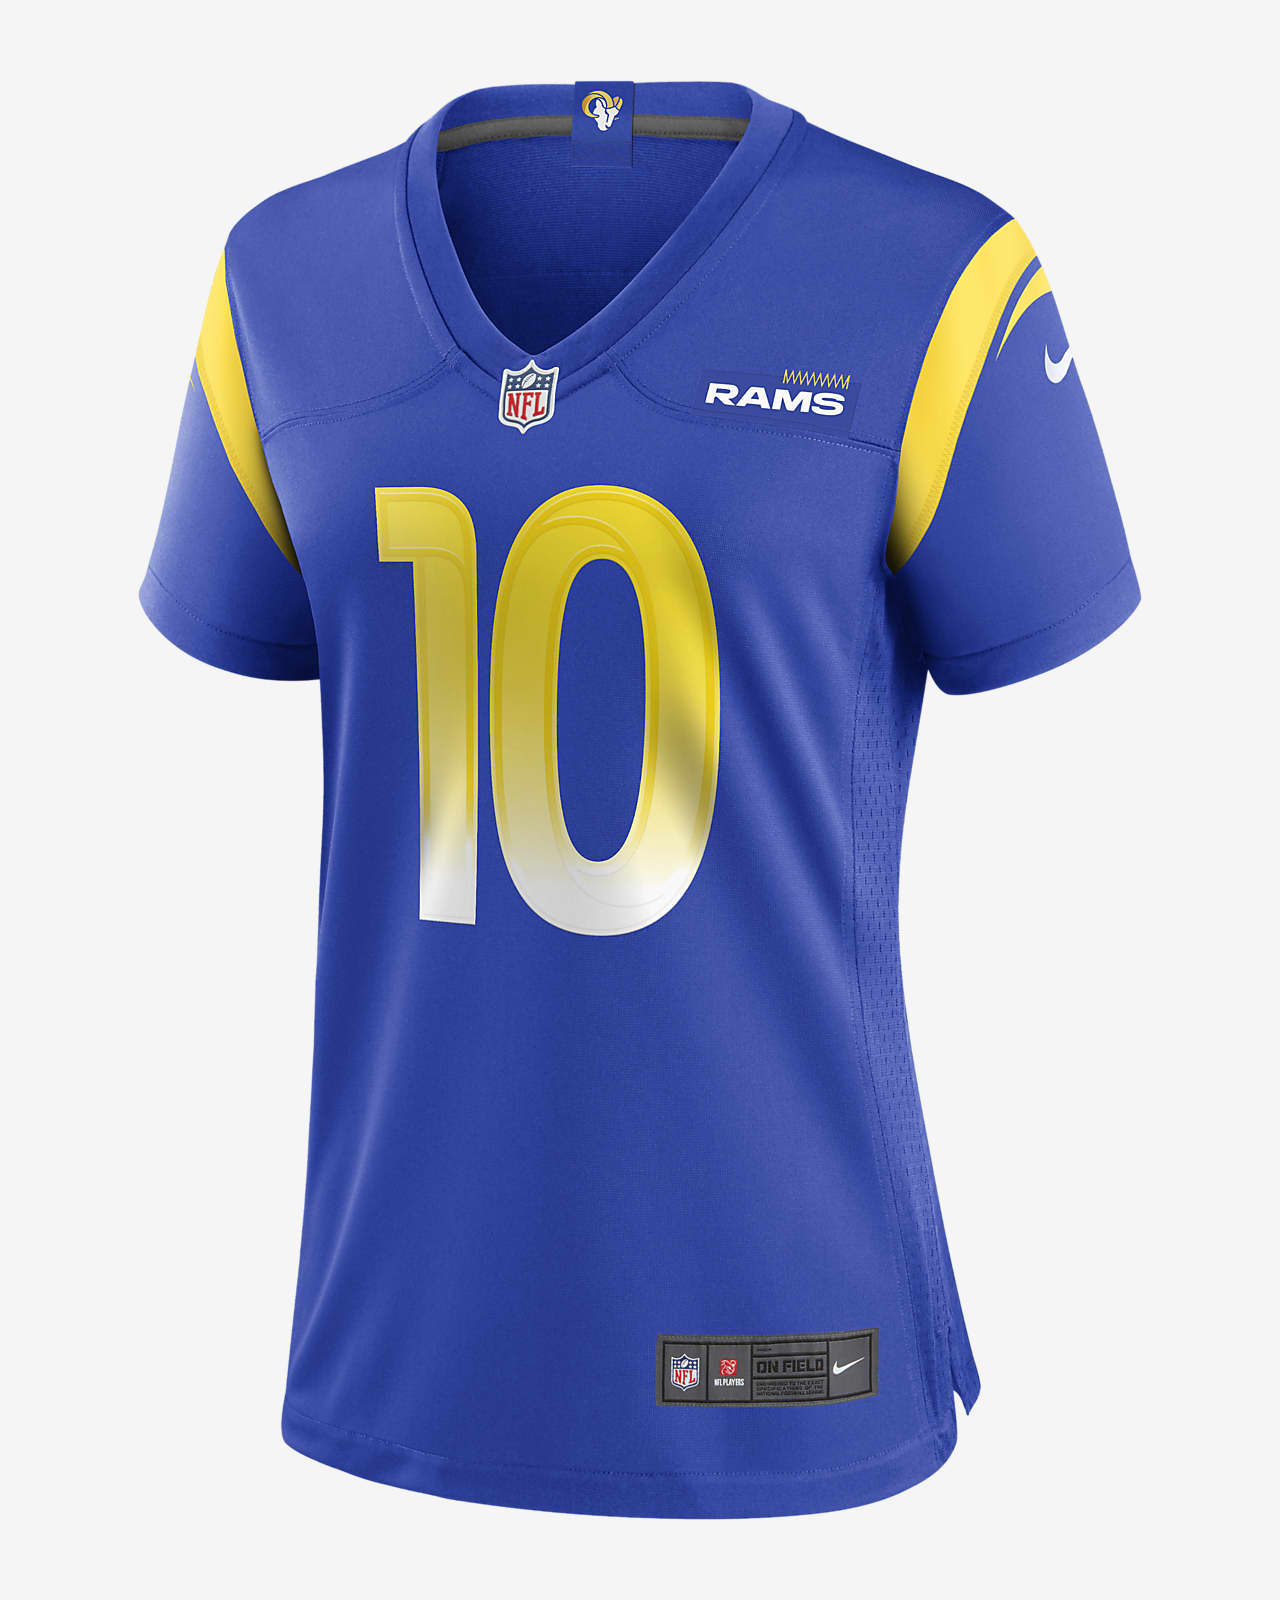 Camiseta de fútbol americano Game para mujer NFL Los Angeles Rams (Cooper Kupp)